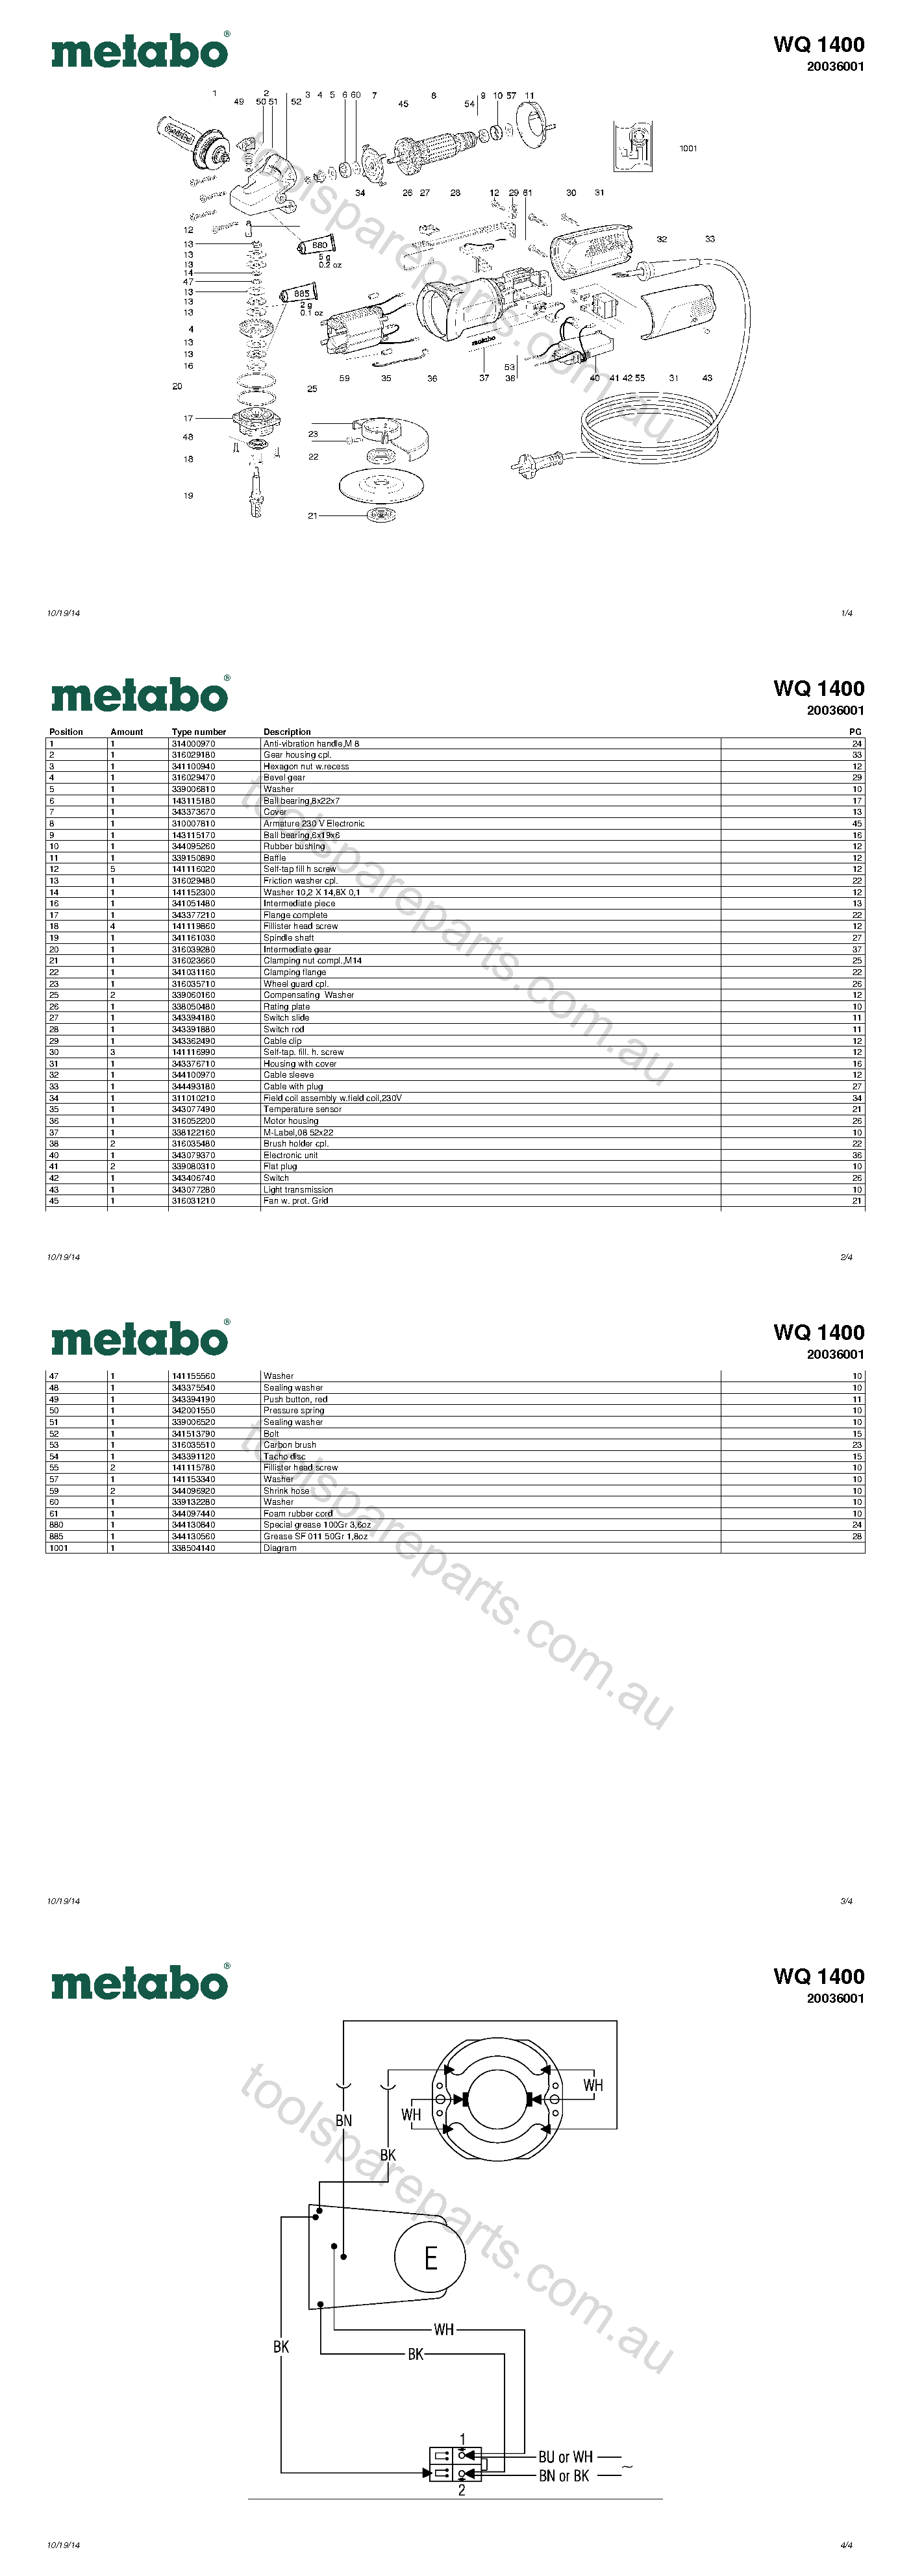 Metabo WQ 1400 20036001  Diagram 1